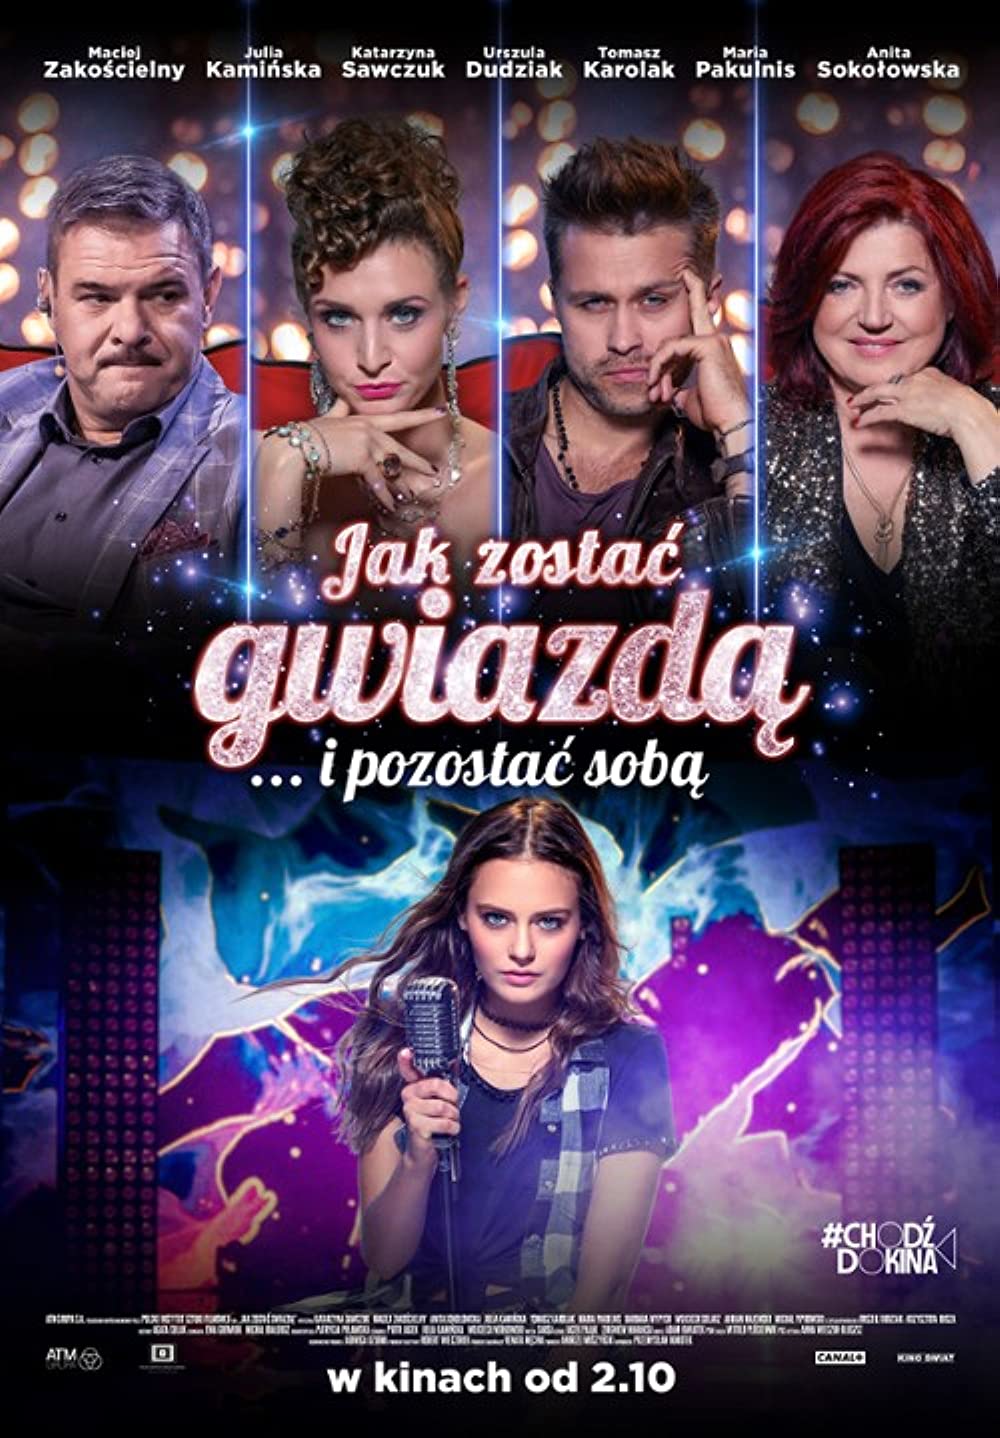 Filmbeschreibung zu Jak zostac gwiazda